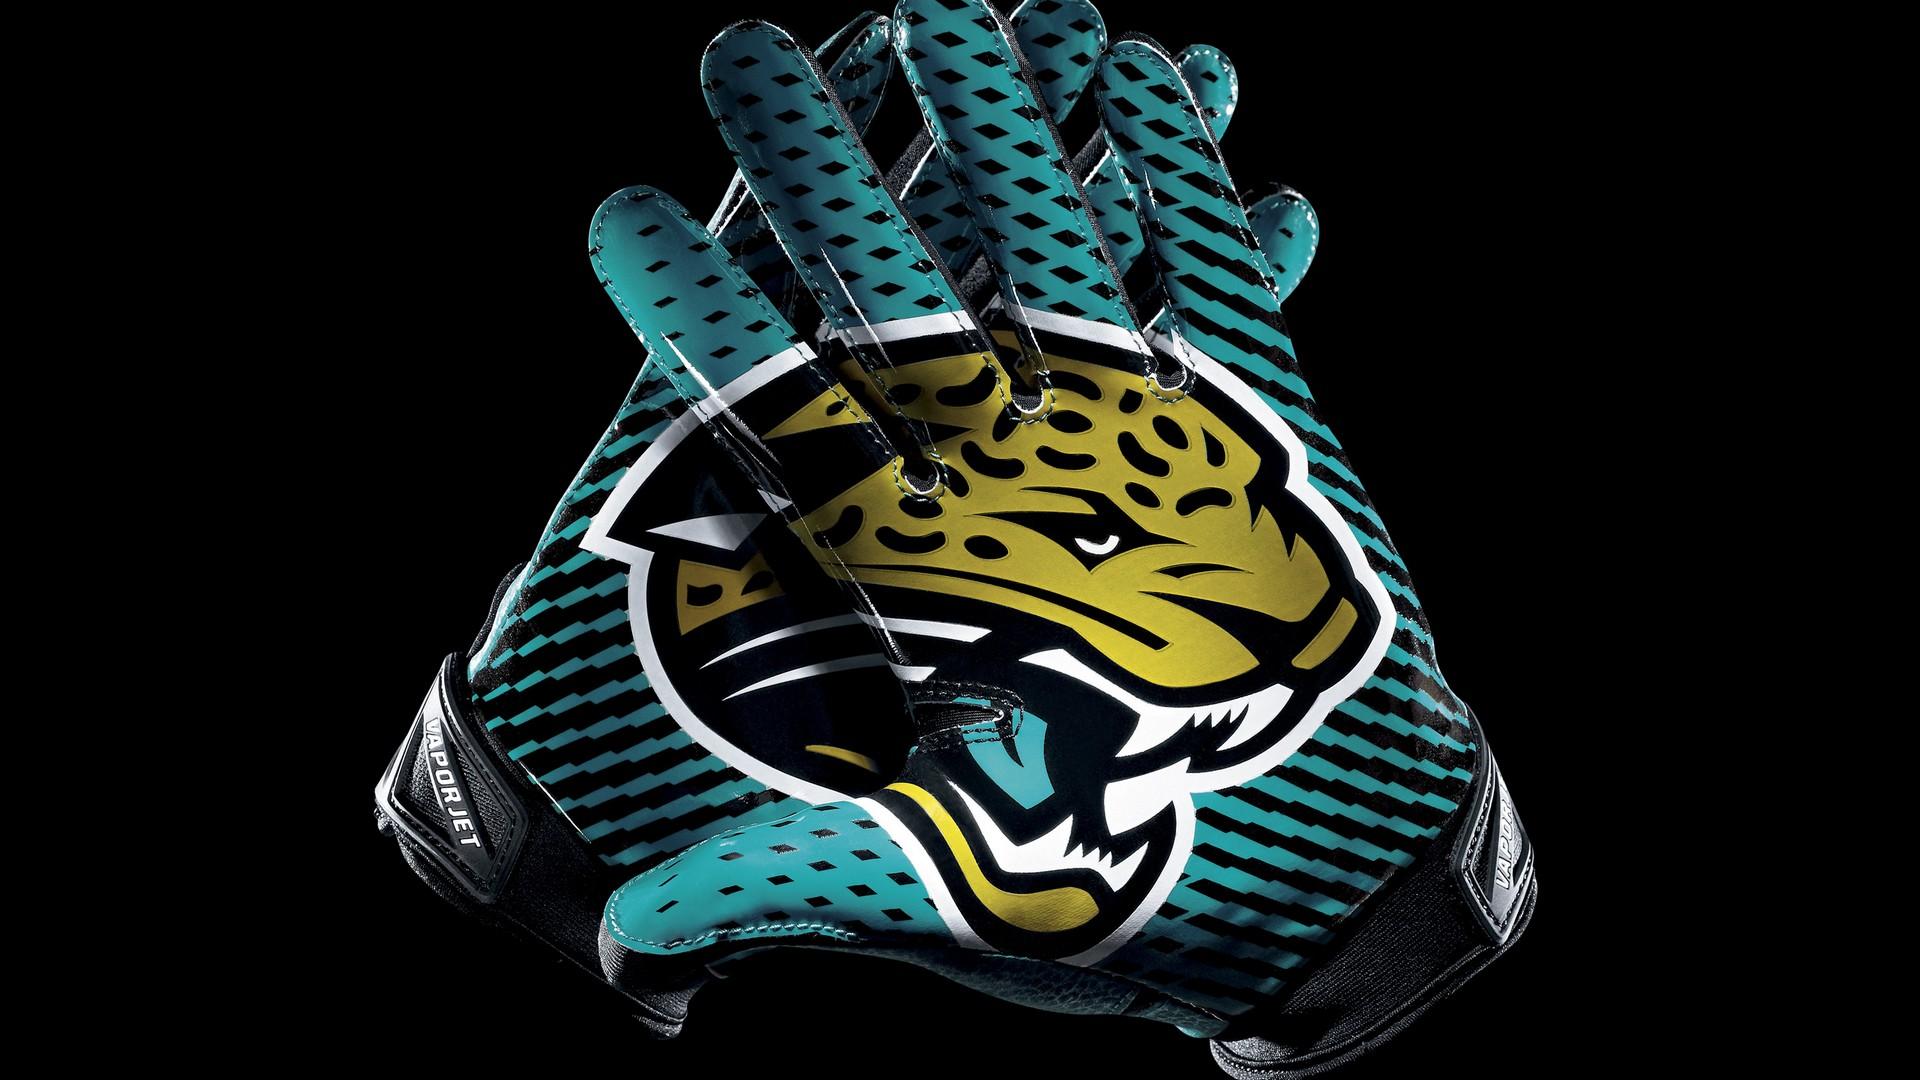 Jacksonville Jaguars Desktop Wallpaper NFL Football Wallpaper